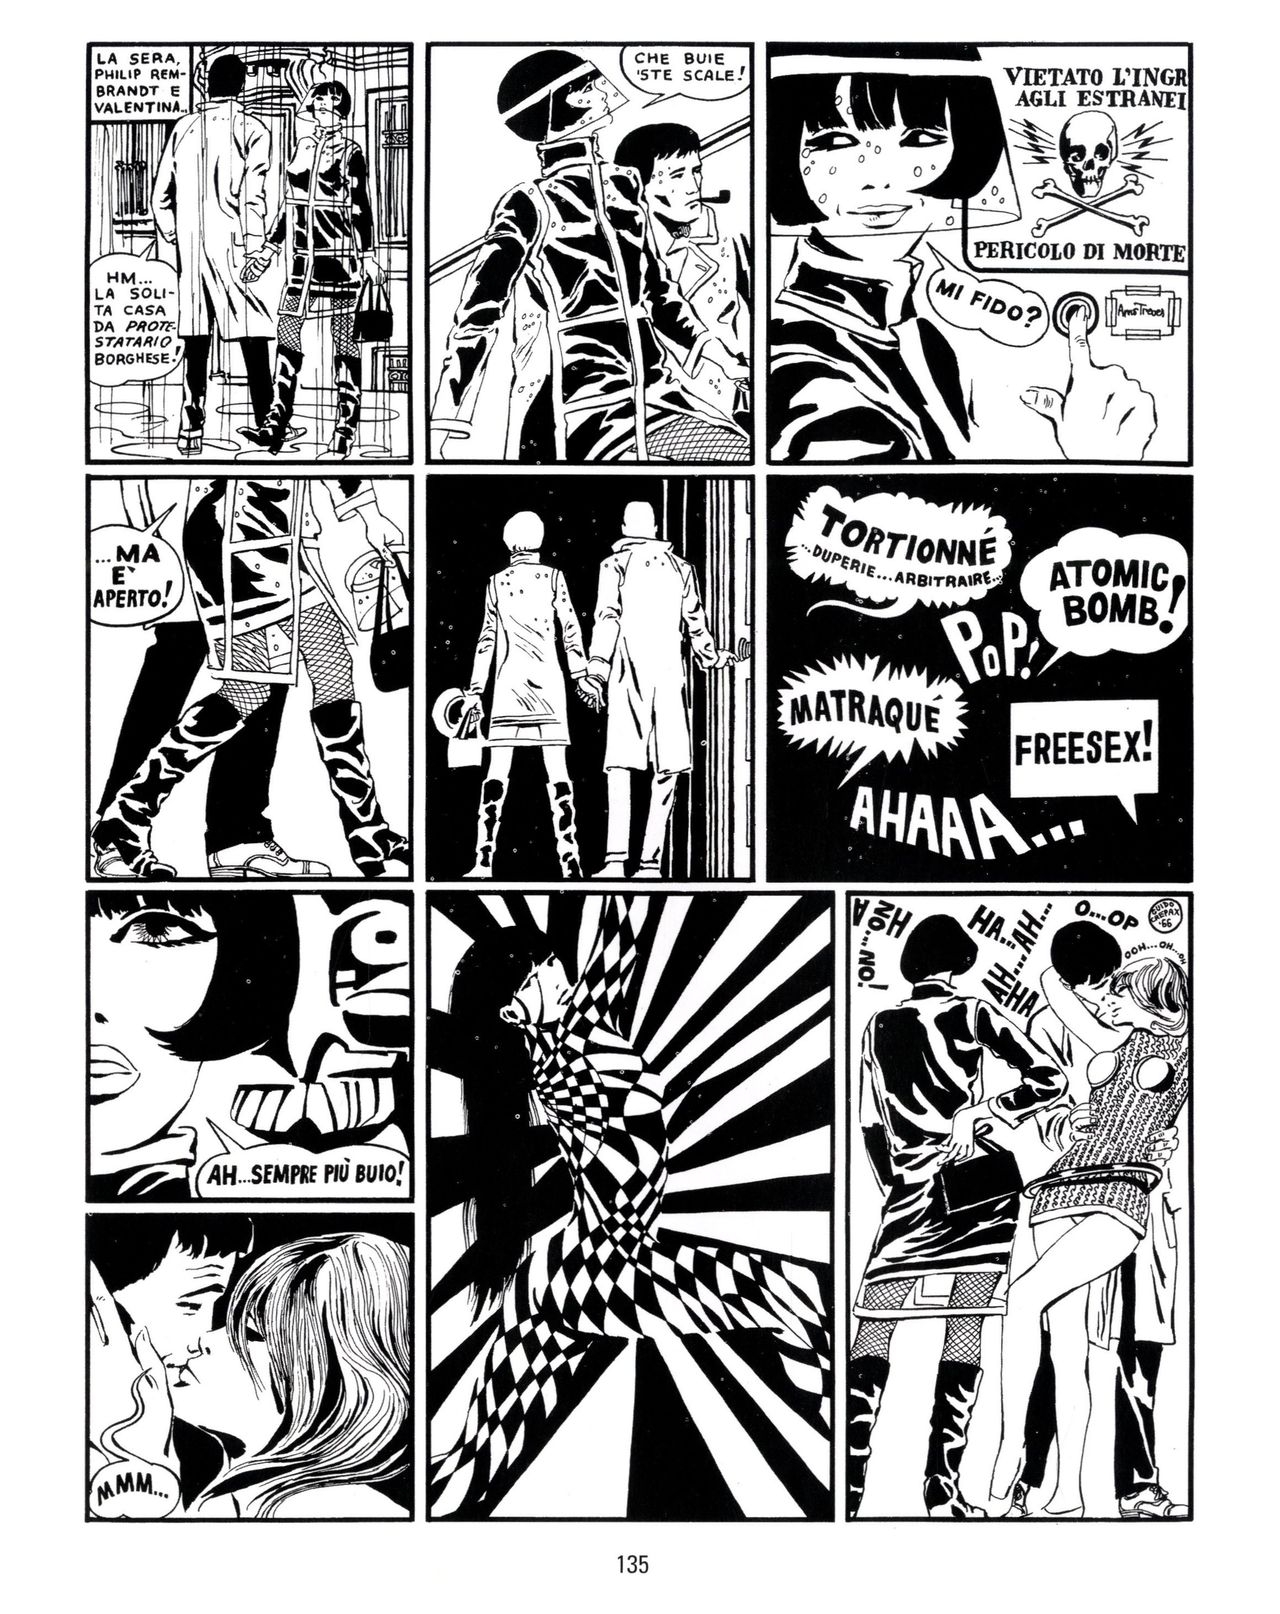 [Guido Crepax] Erotica Fumetti #25 : L'ascesa dei sotterranei : I cavalieri ciechi [Italian] 136